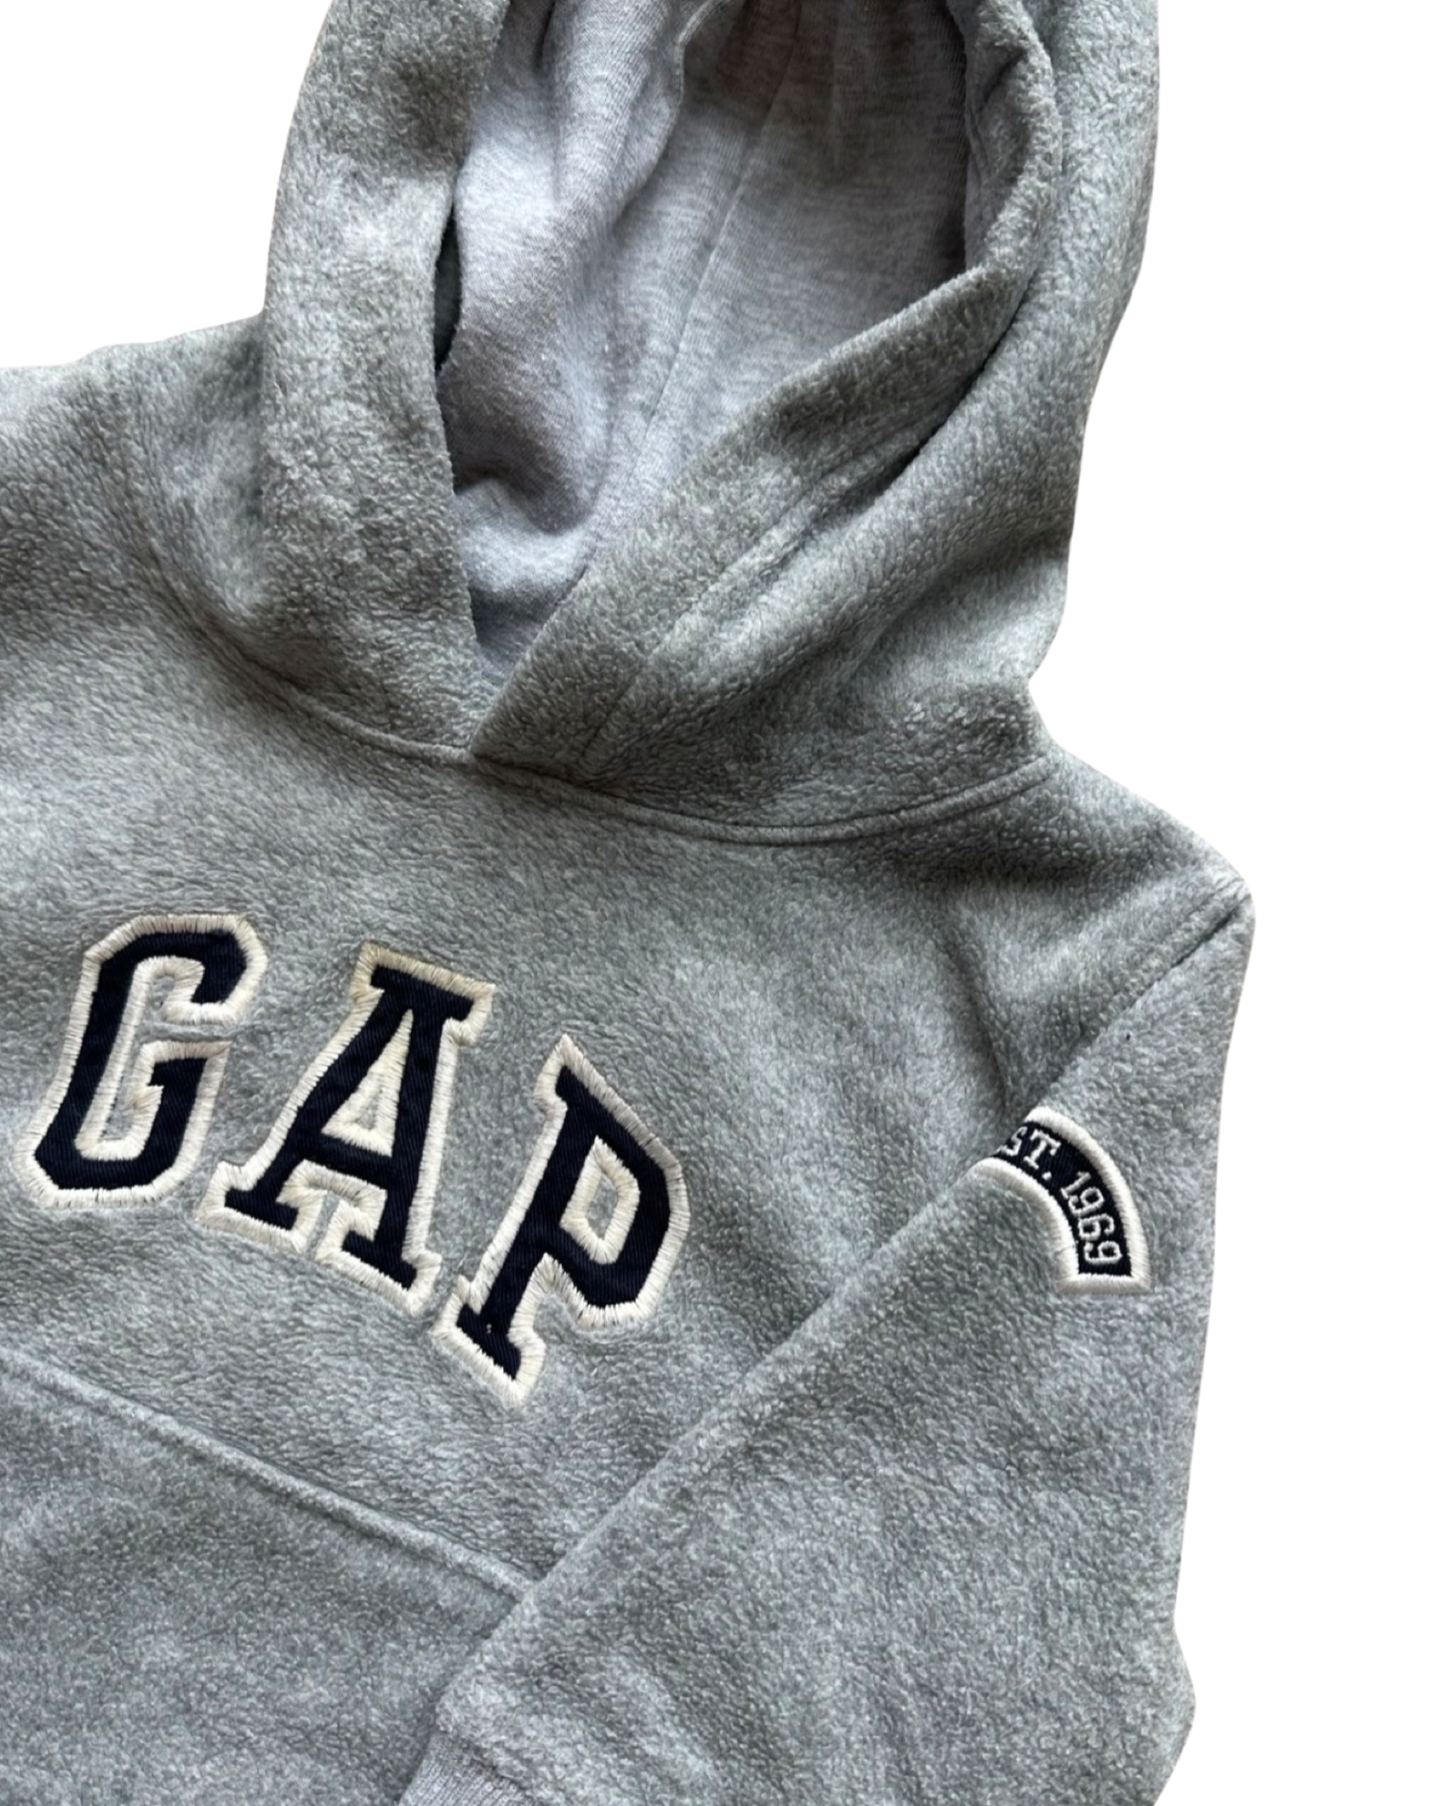 Baby Gap classic logo fleece hoodie in grey (size 6-12mths)